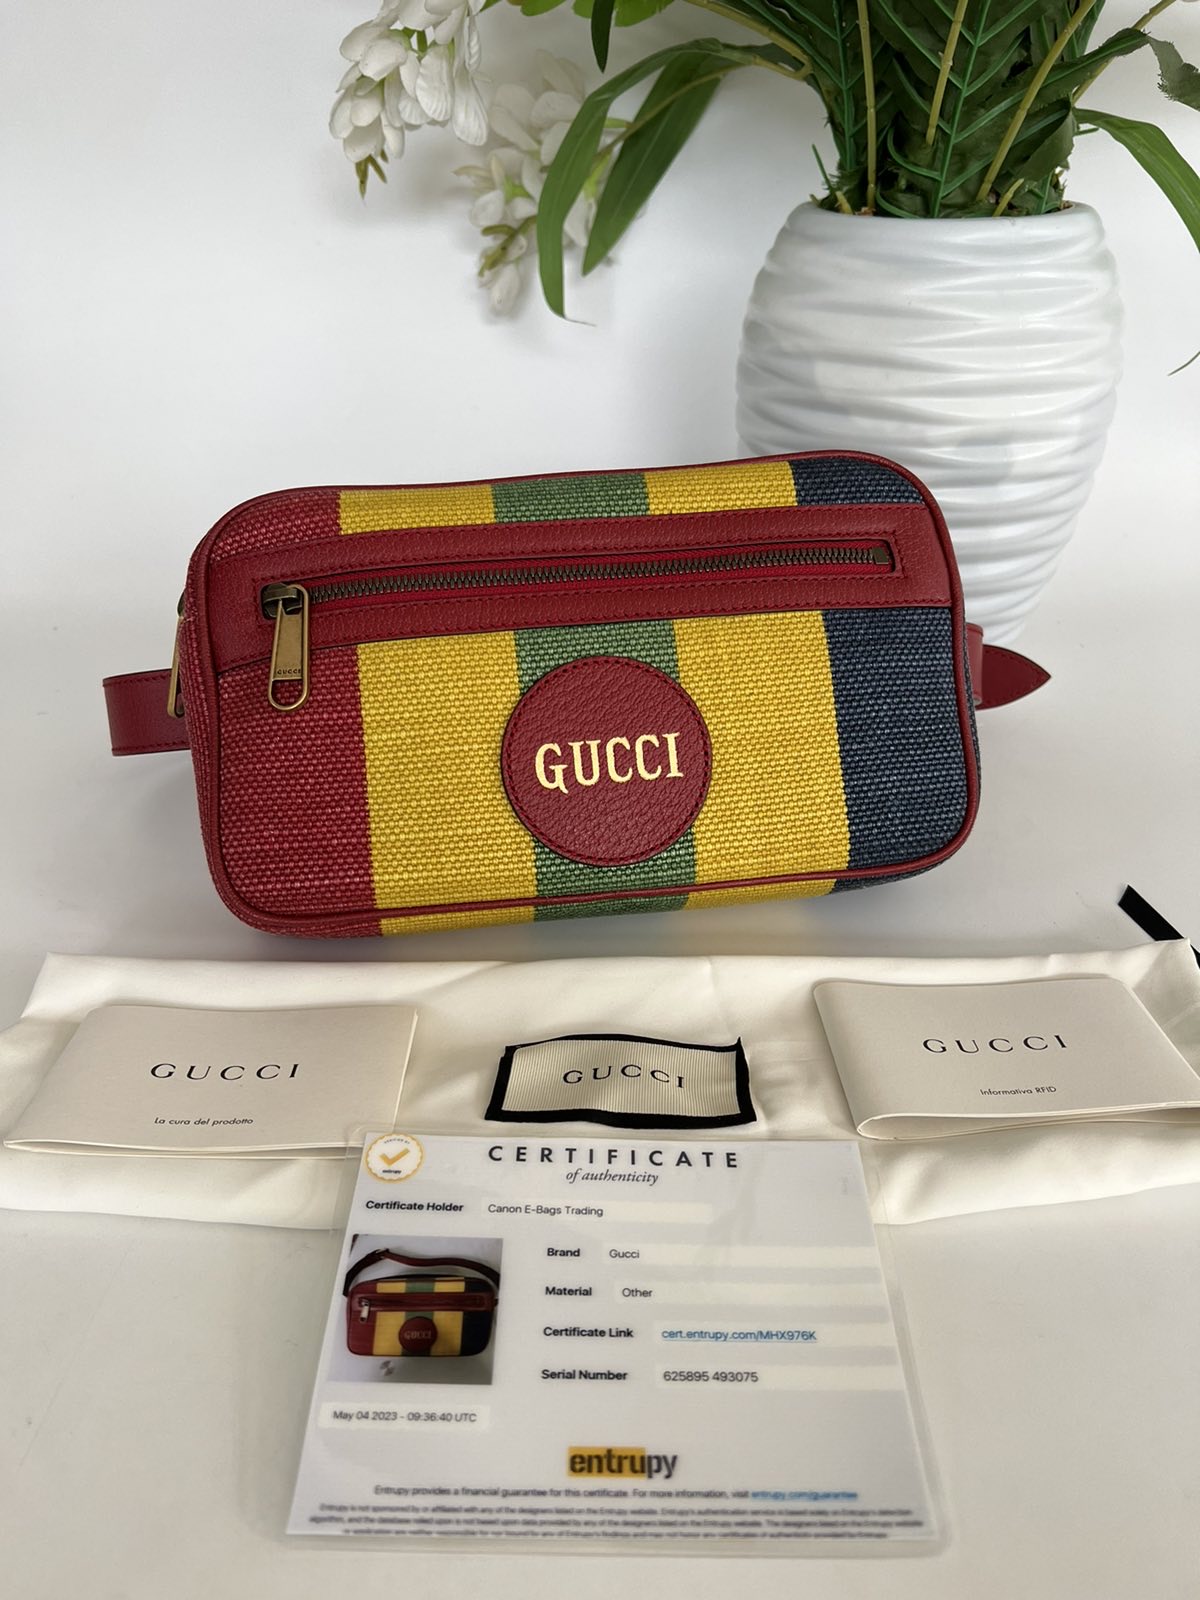 Gucci GG Supreme Ophidia Card Case. Made in Italy - Canon E-Bags Prime